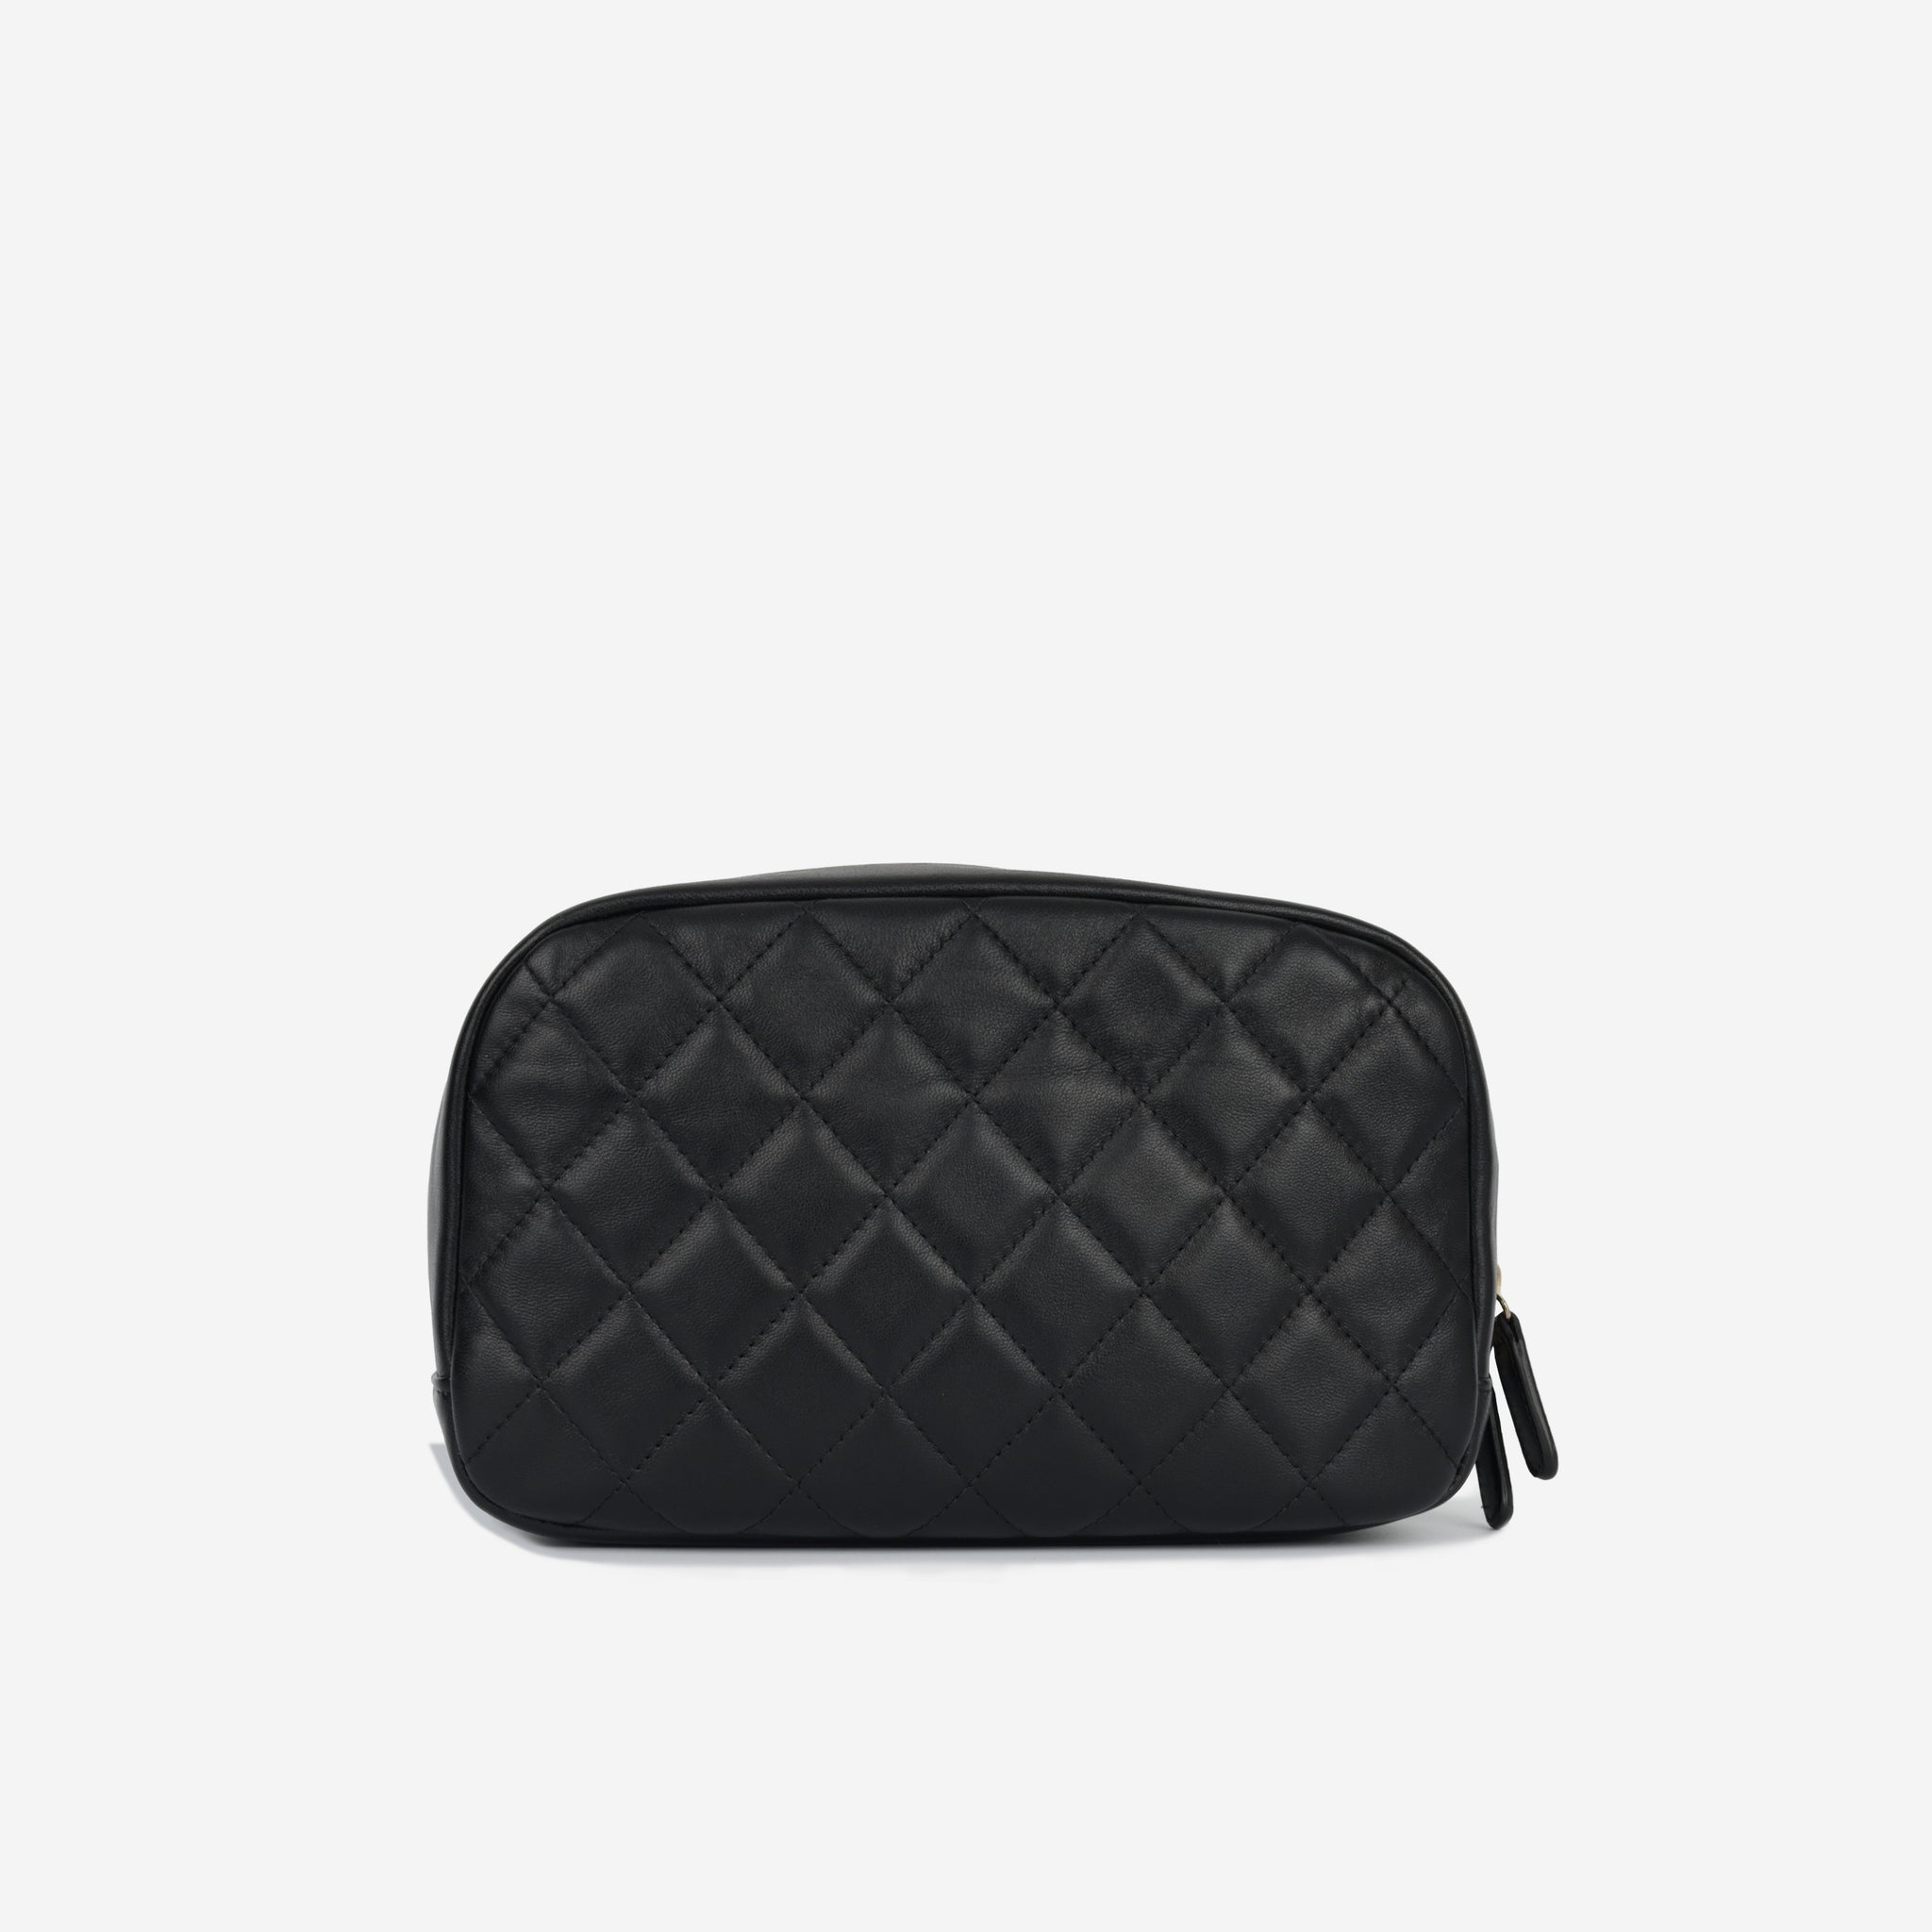 Chanel - Curvy Cosmetic Pouch - Black Lambskin GHW - 2019